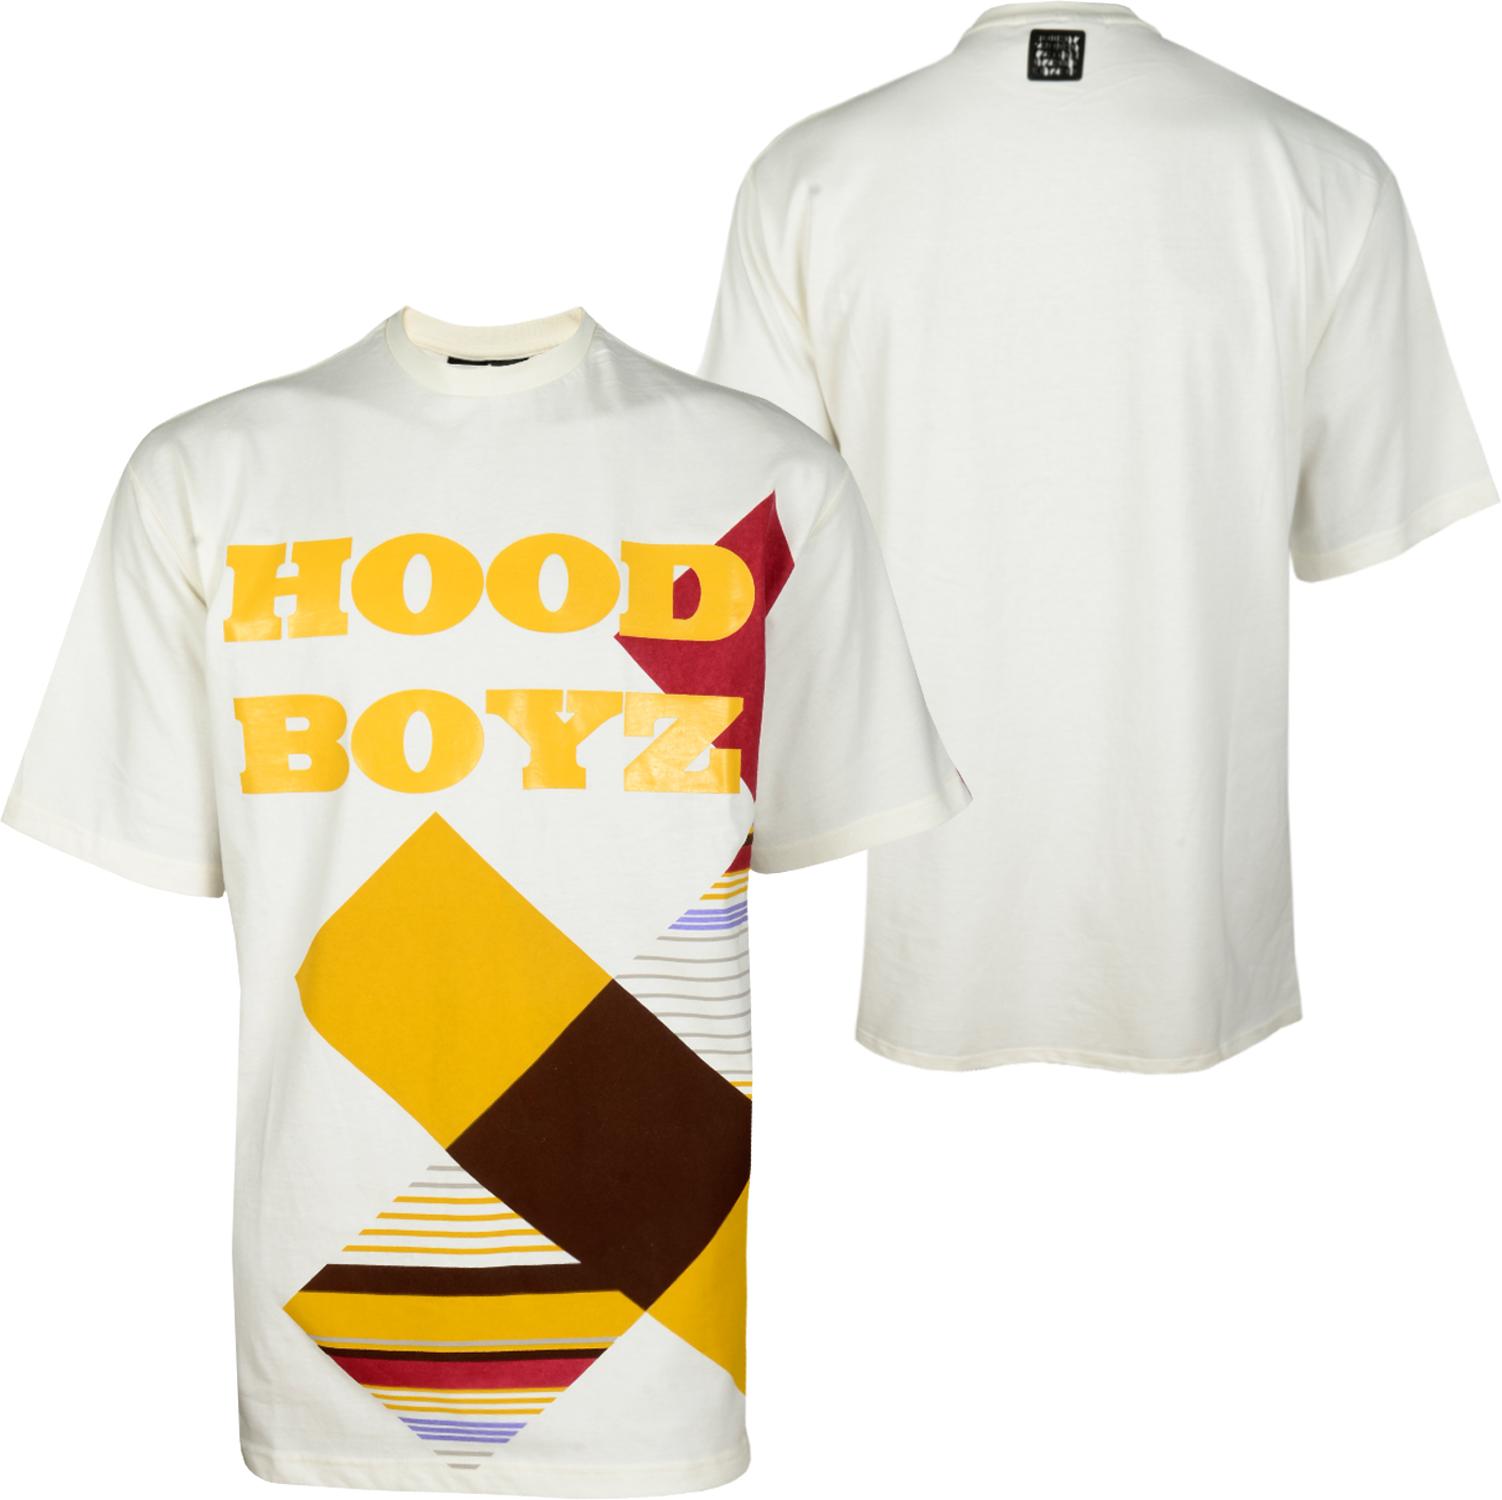 Foto Hoodboyz Checkout Camisetas Beige foto 126939